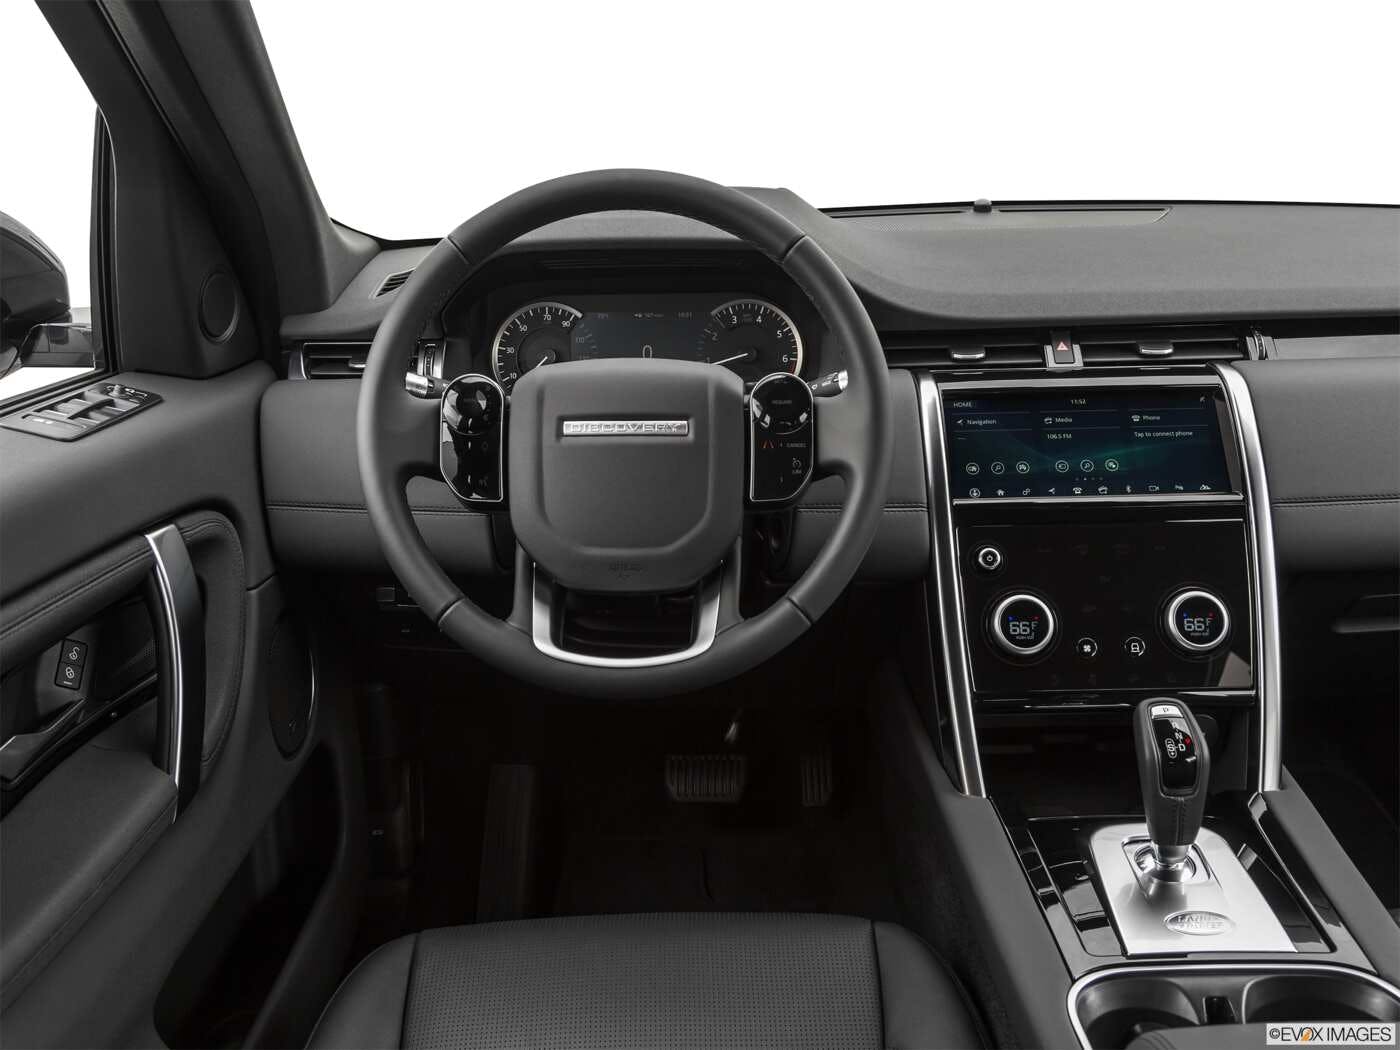 Discover the 2020 Range Rover Interior